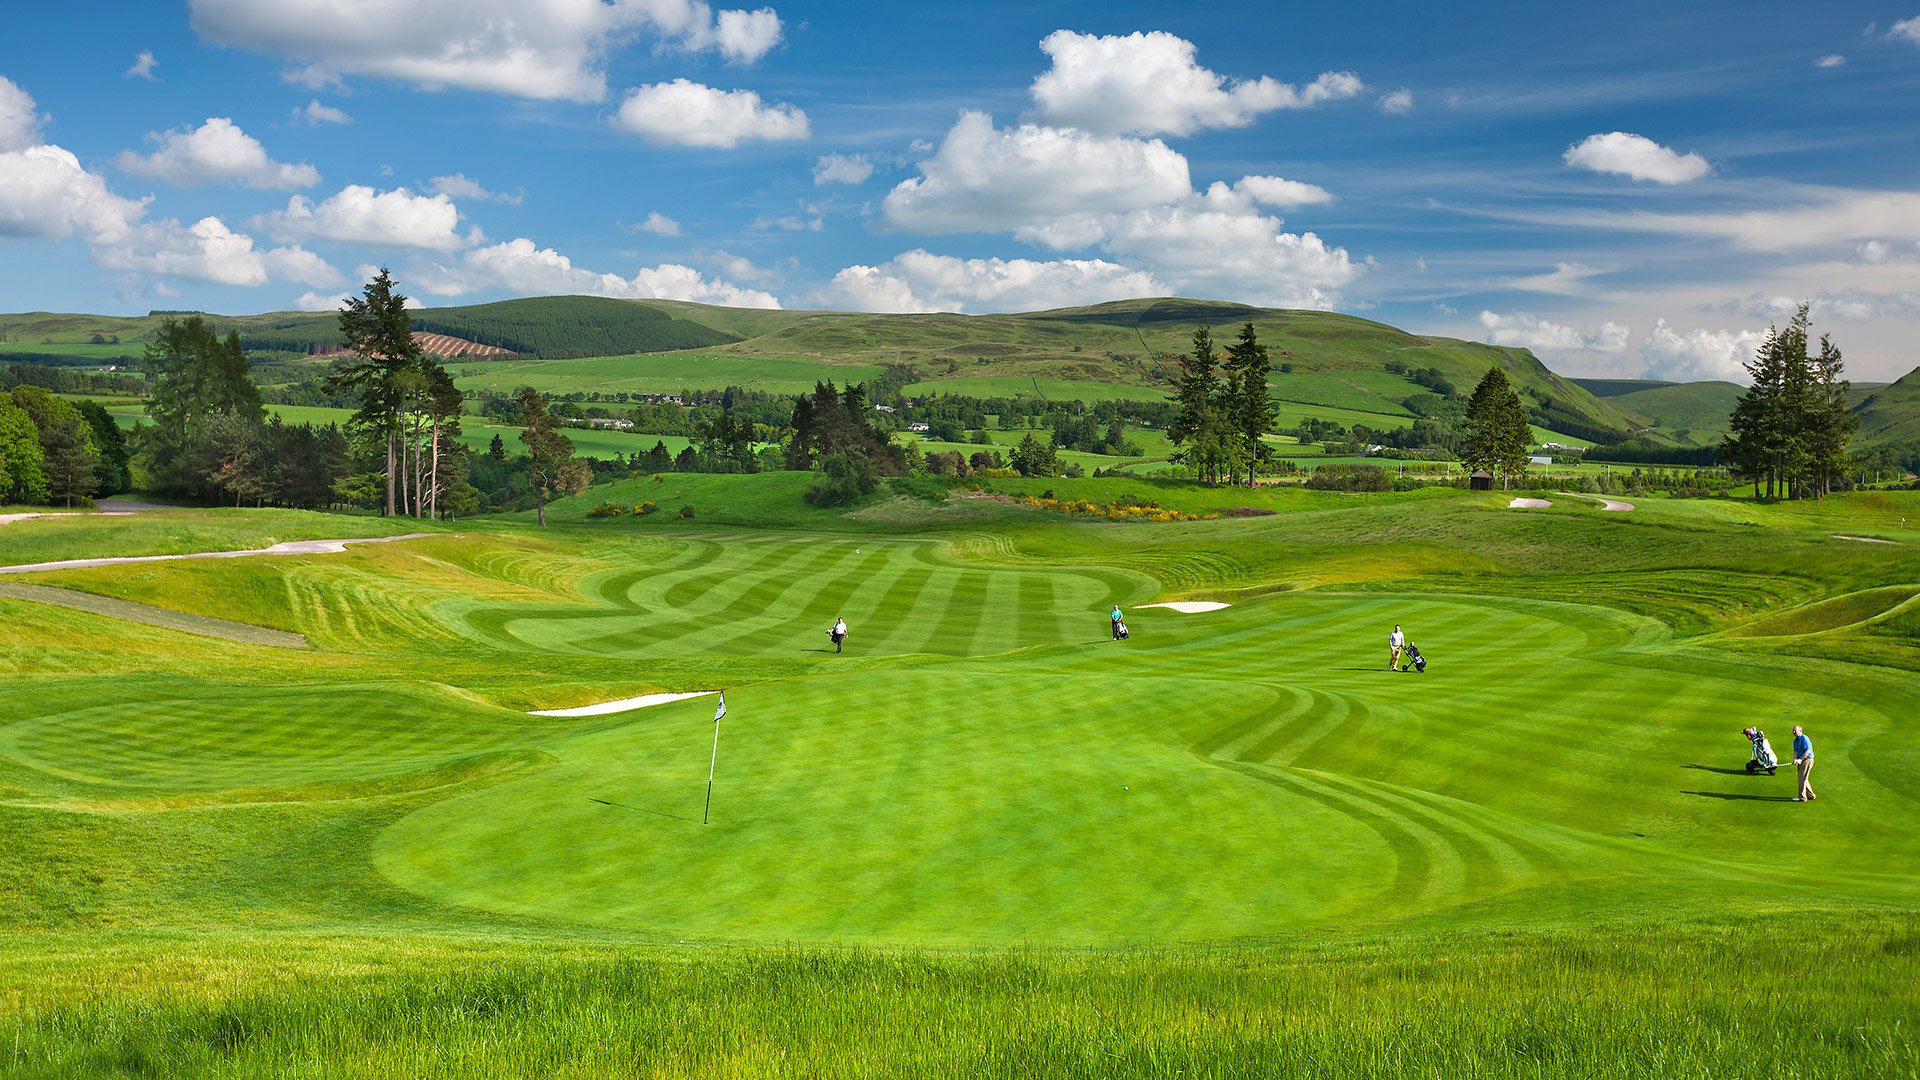 Golfing in Perthshire, Scotland